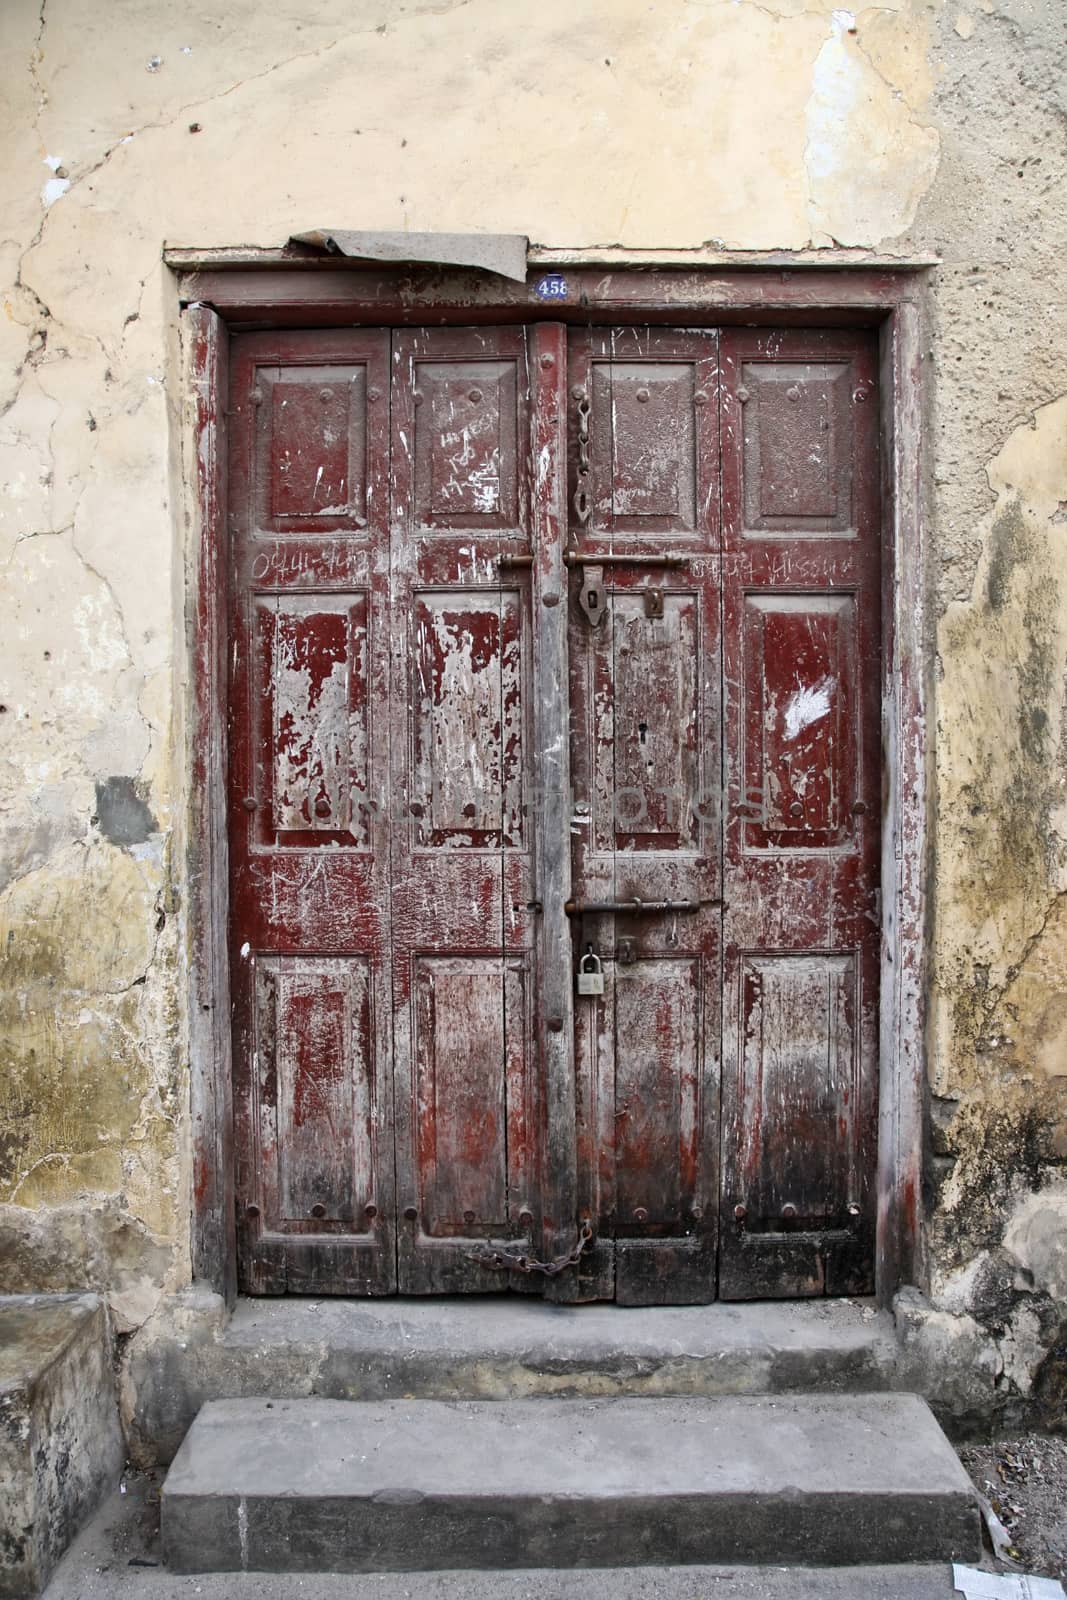 Old wooden door at Stone Town the capital of Zanzibar island East Africa.